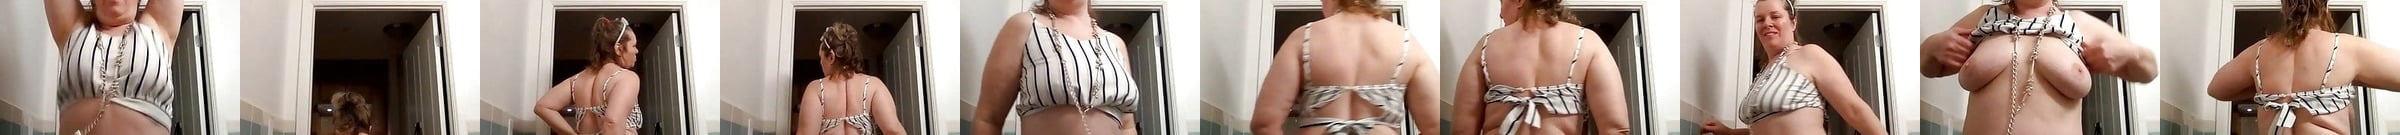 Amazing Free Celeb Jihad And Uflash Porn Video Ba